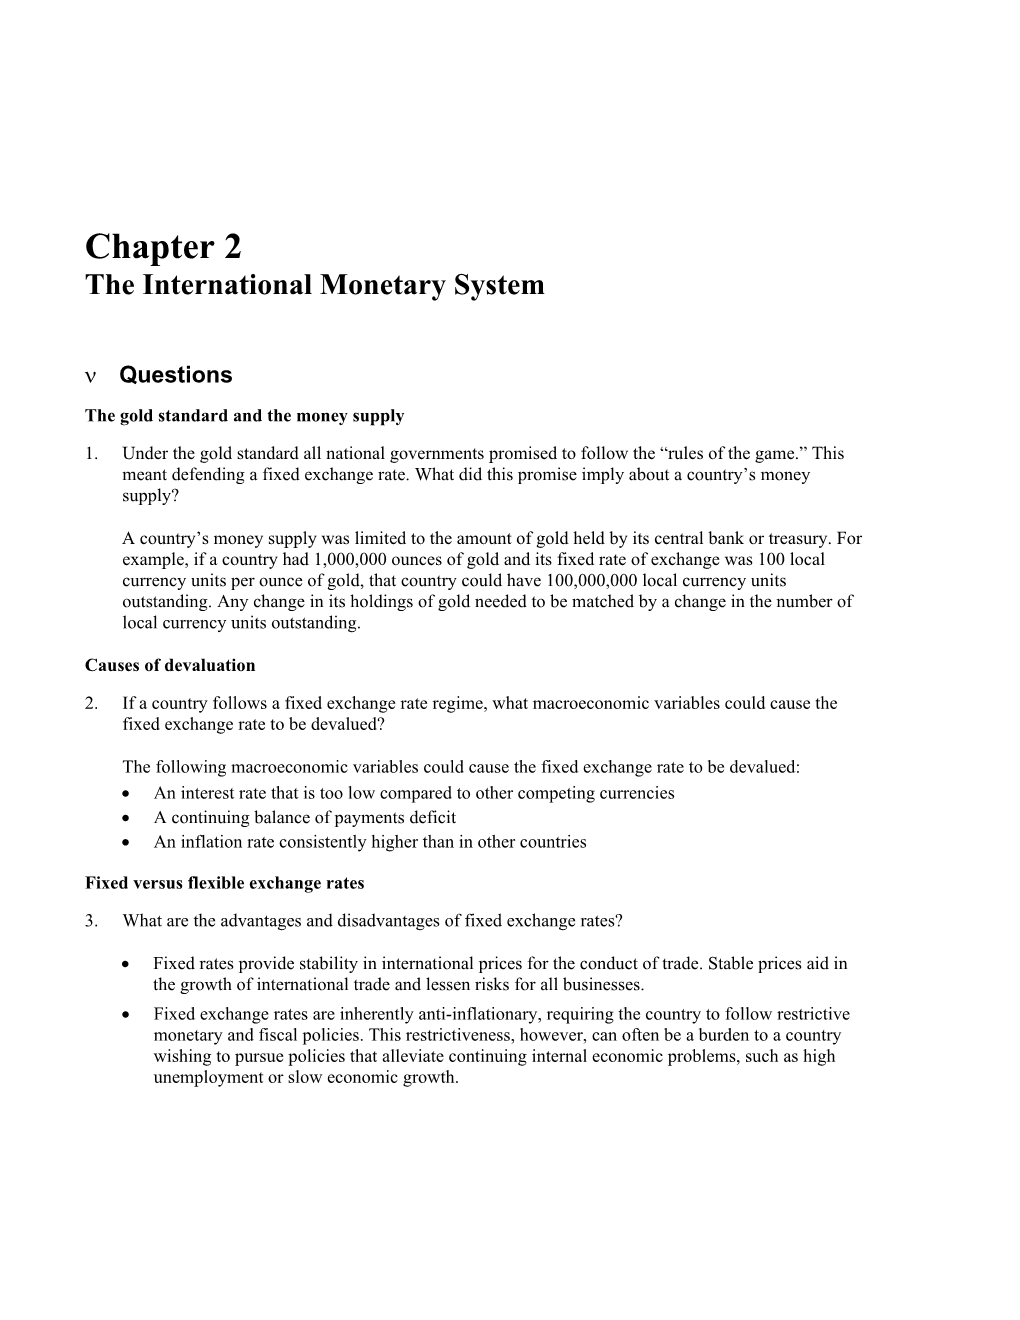 Chapter 2 the International Monetary System 35